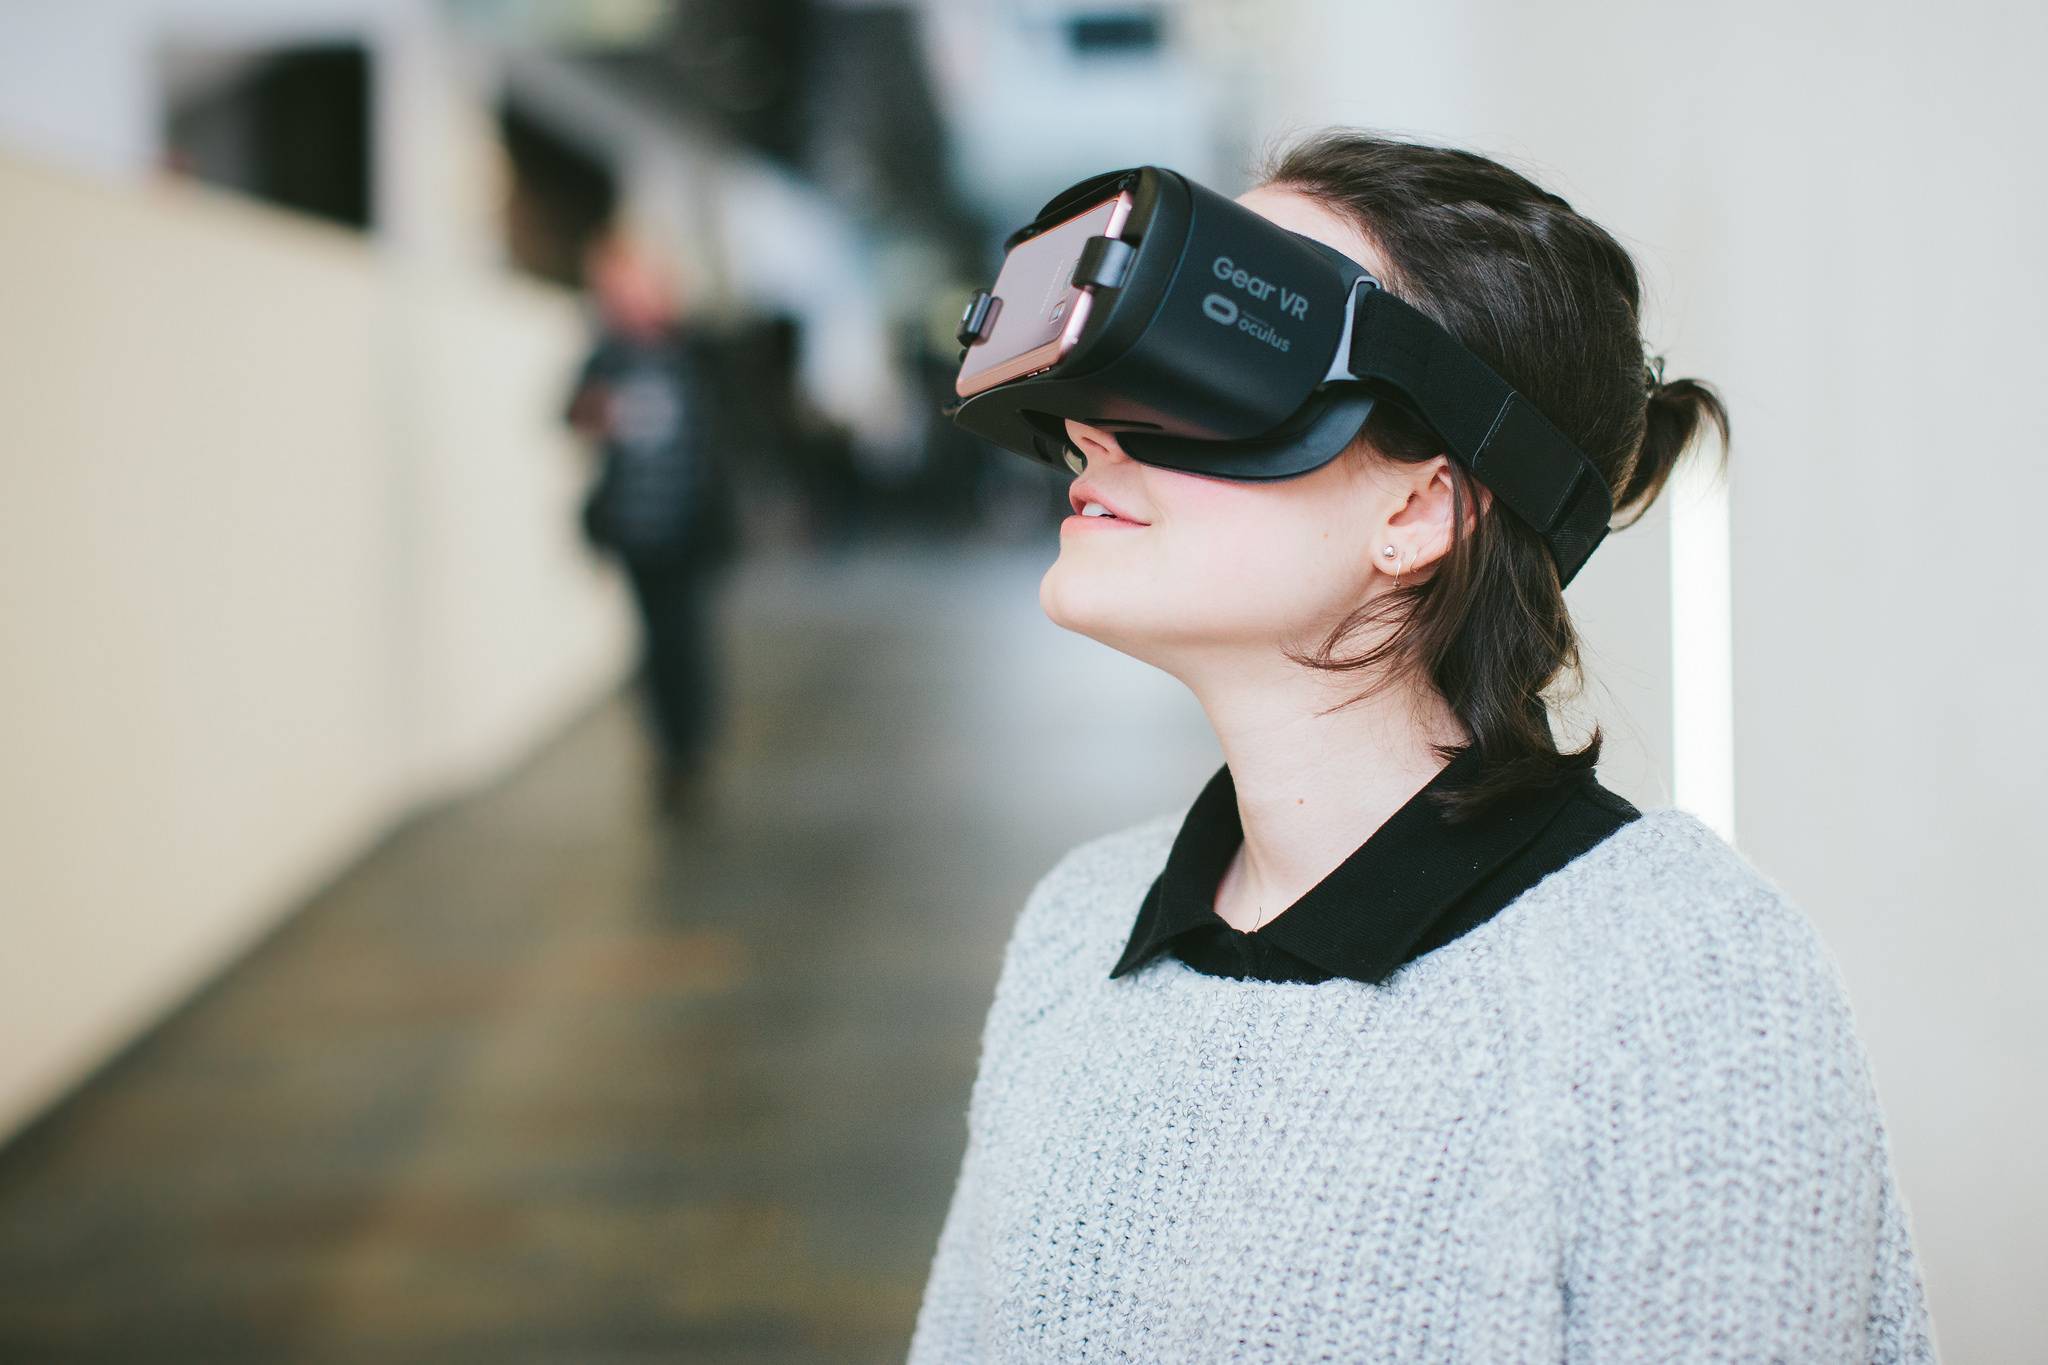 Deutsche Telekom launches a dementia diagnosis VR game